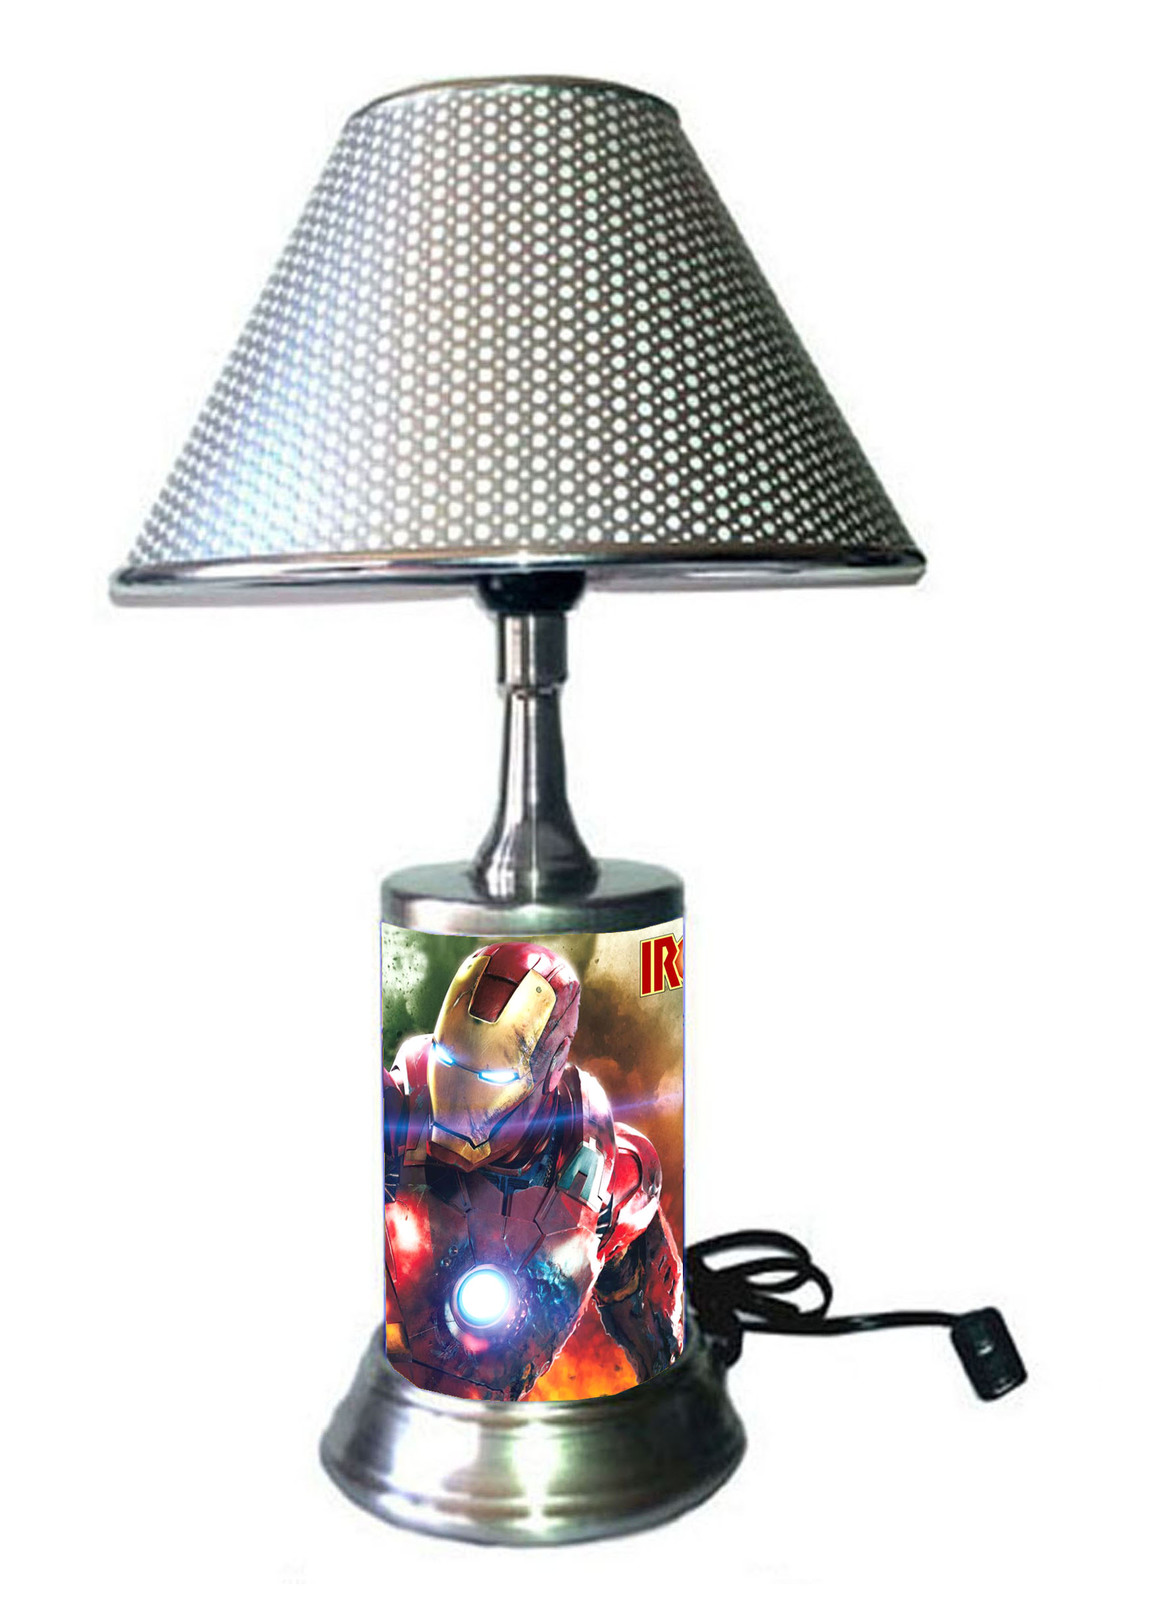 Iron Man desk lamp with chrome finish shade - $44.99